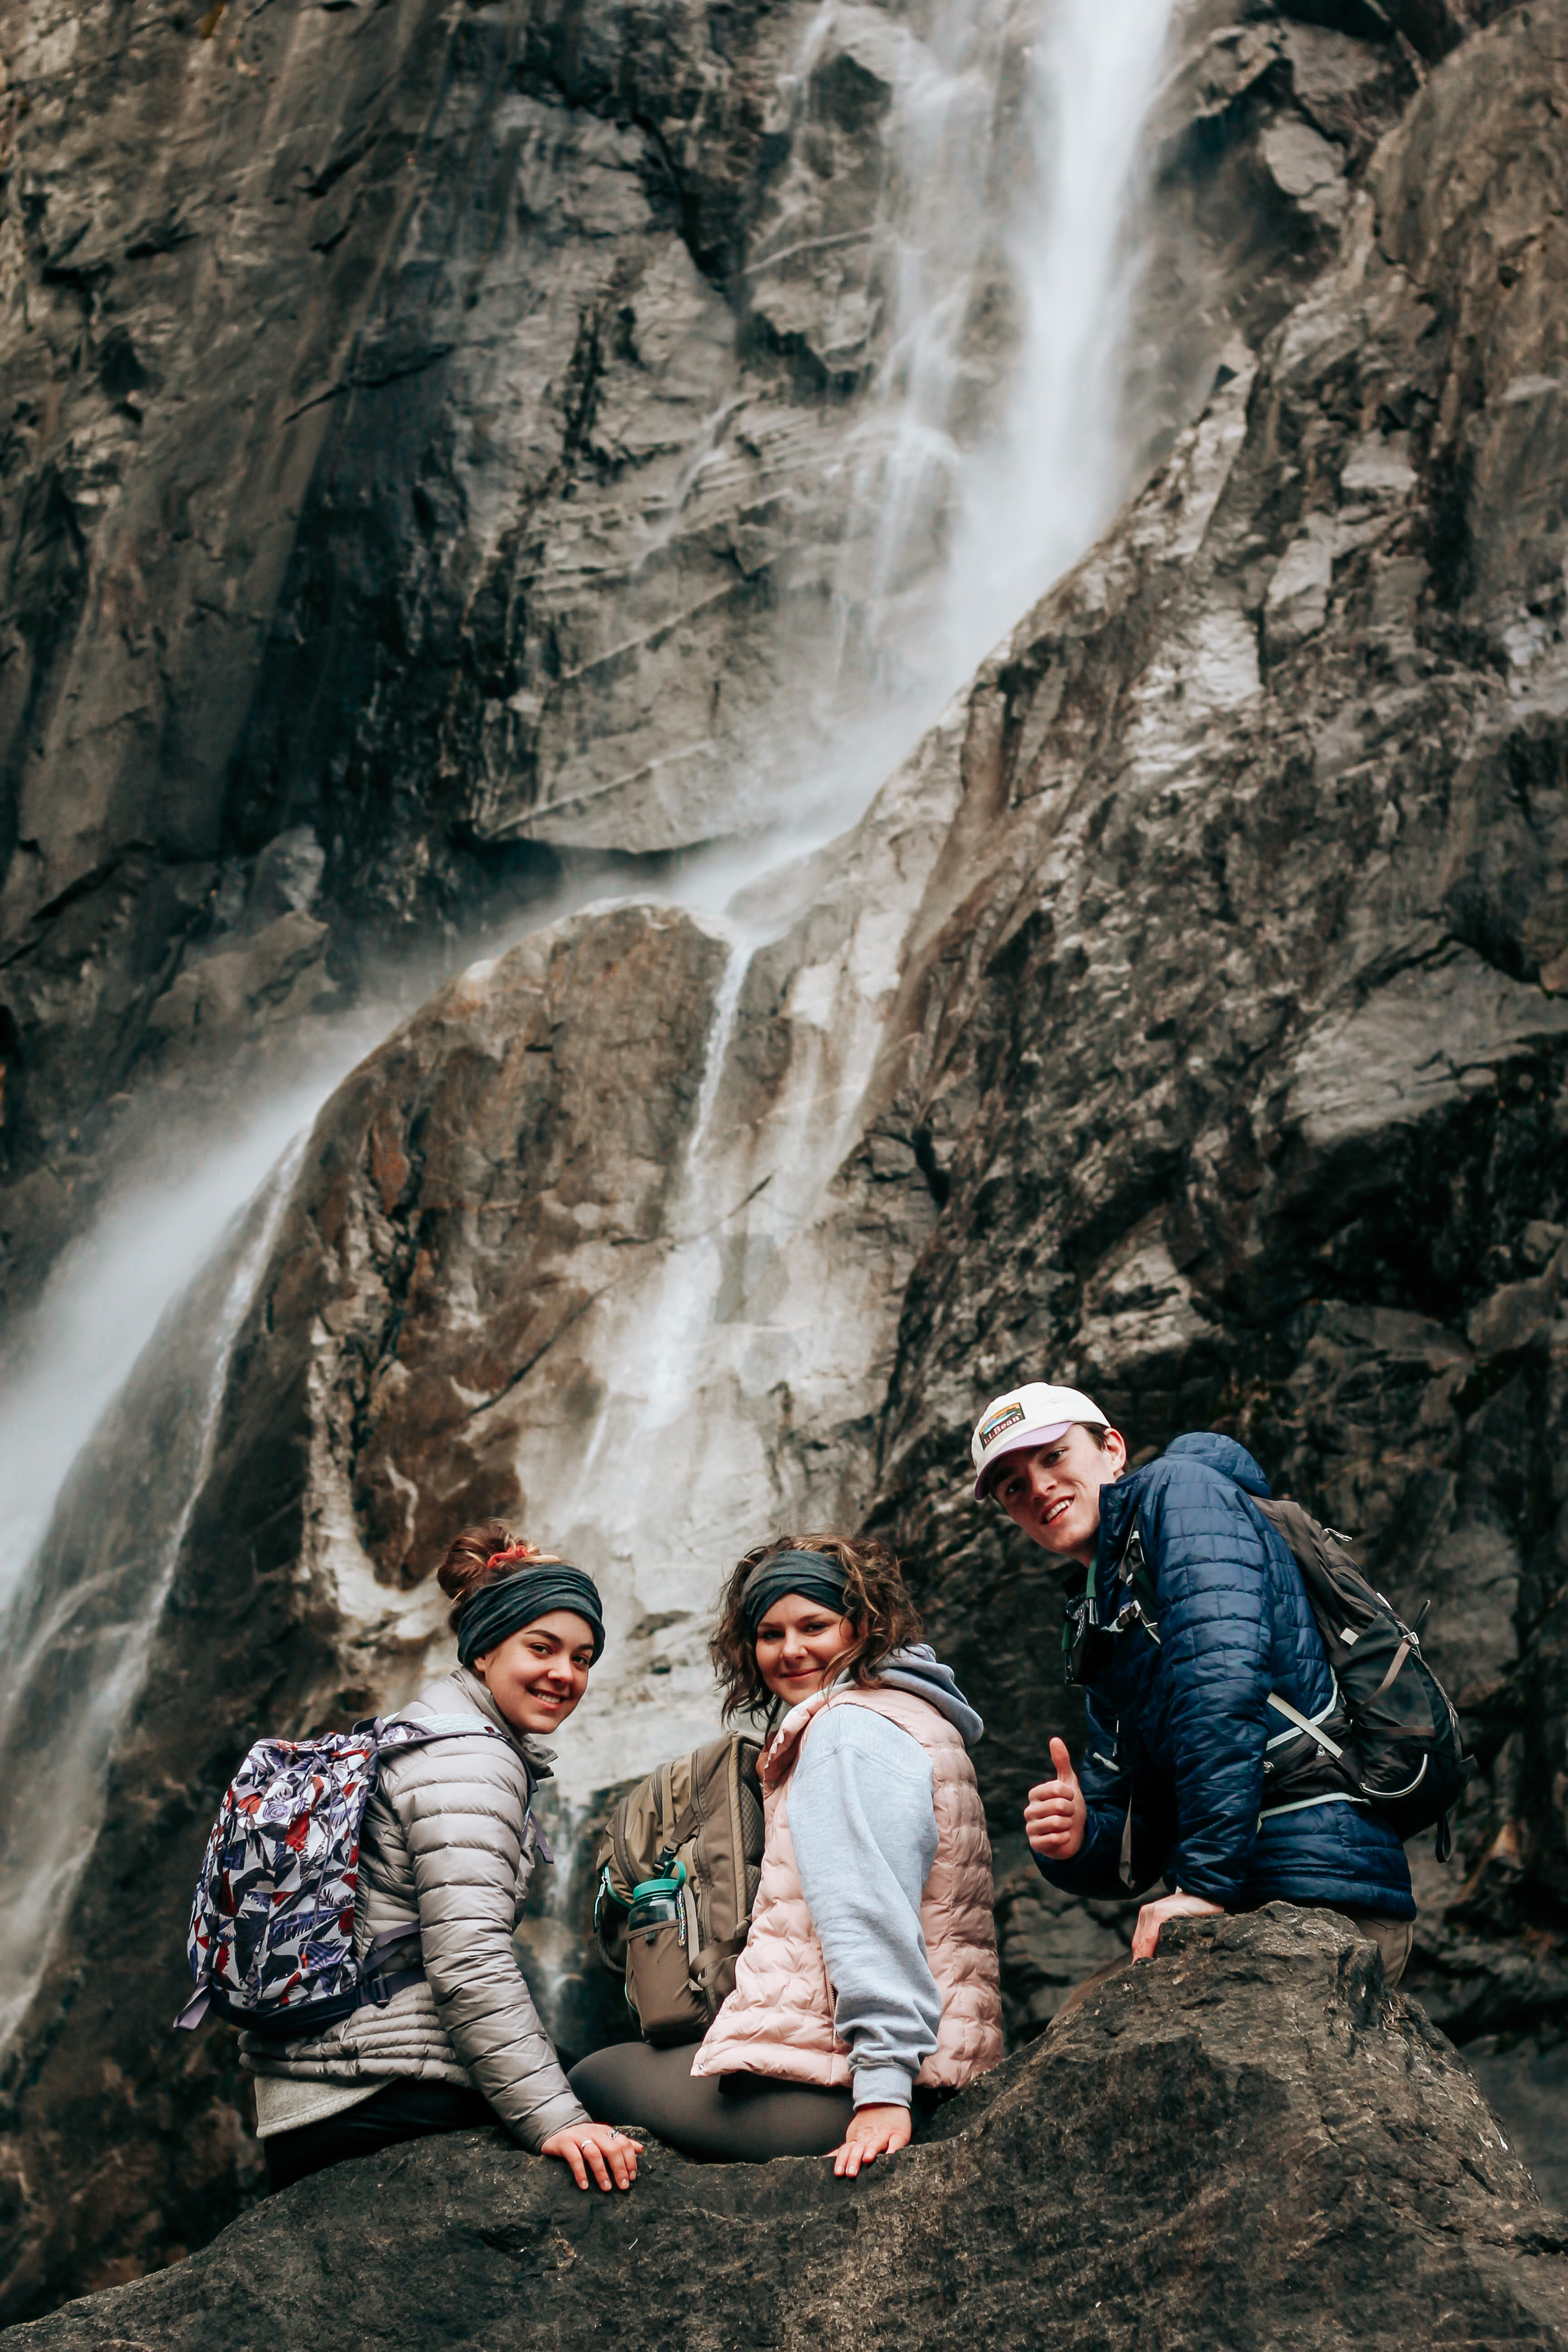 In front of Lower Yosemite falls in Yosemite National Park Summit Adventure Semester Program